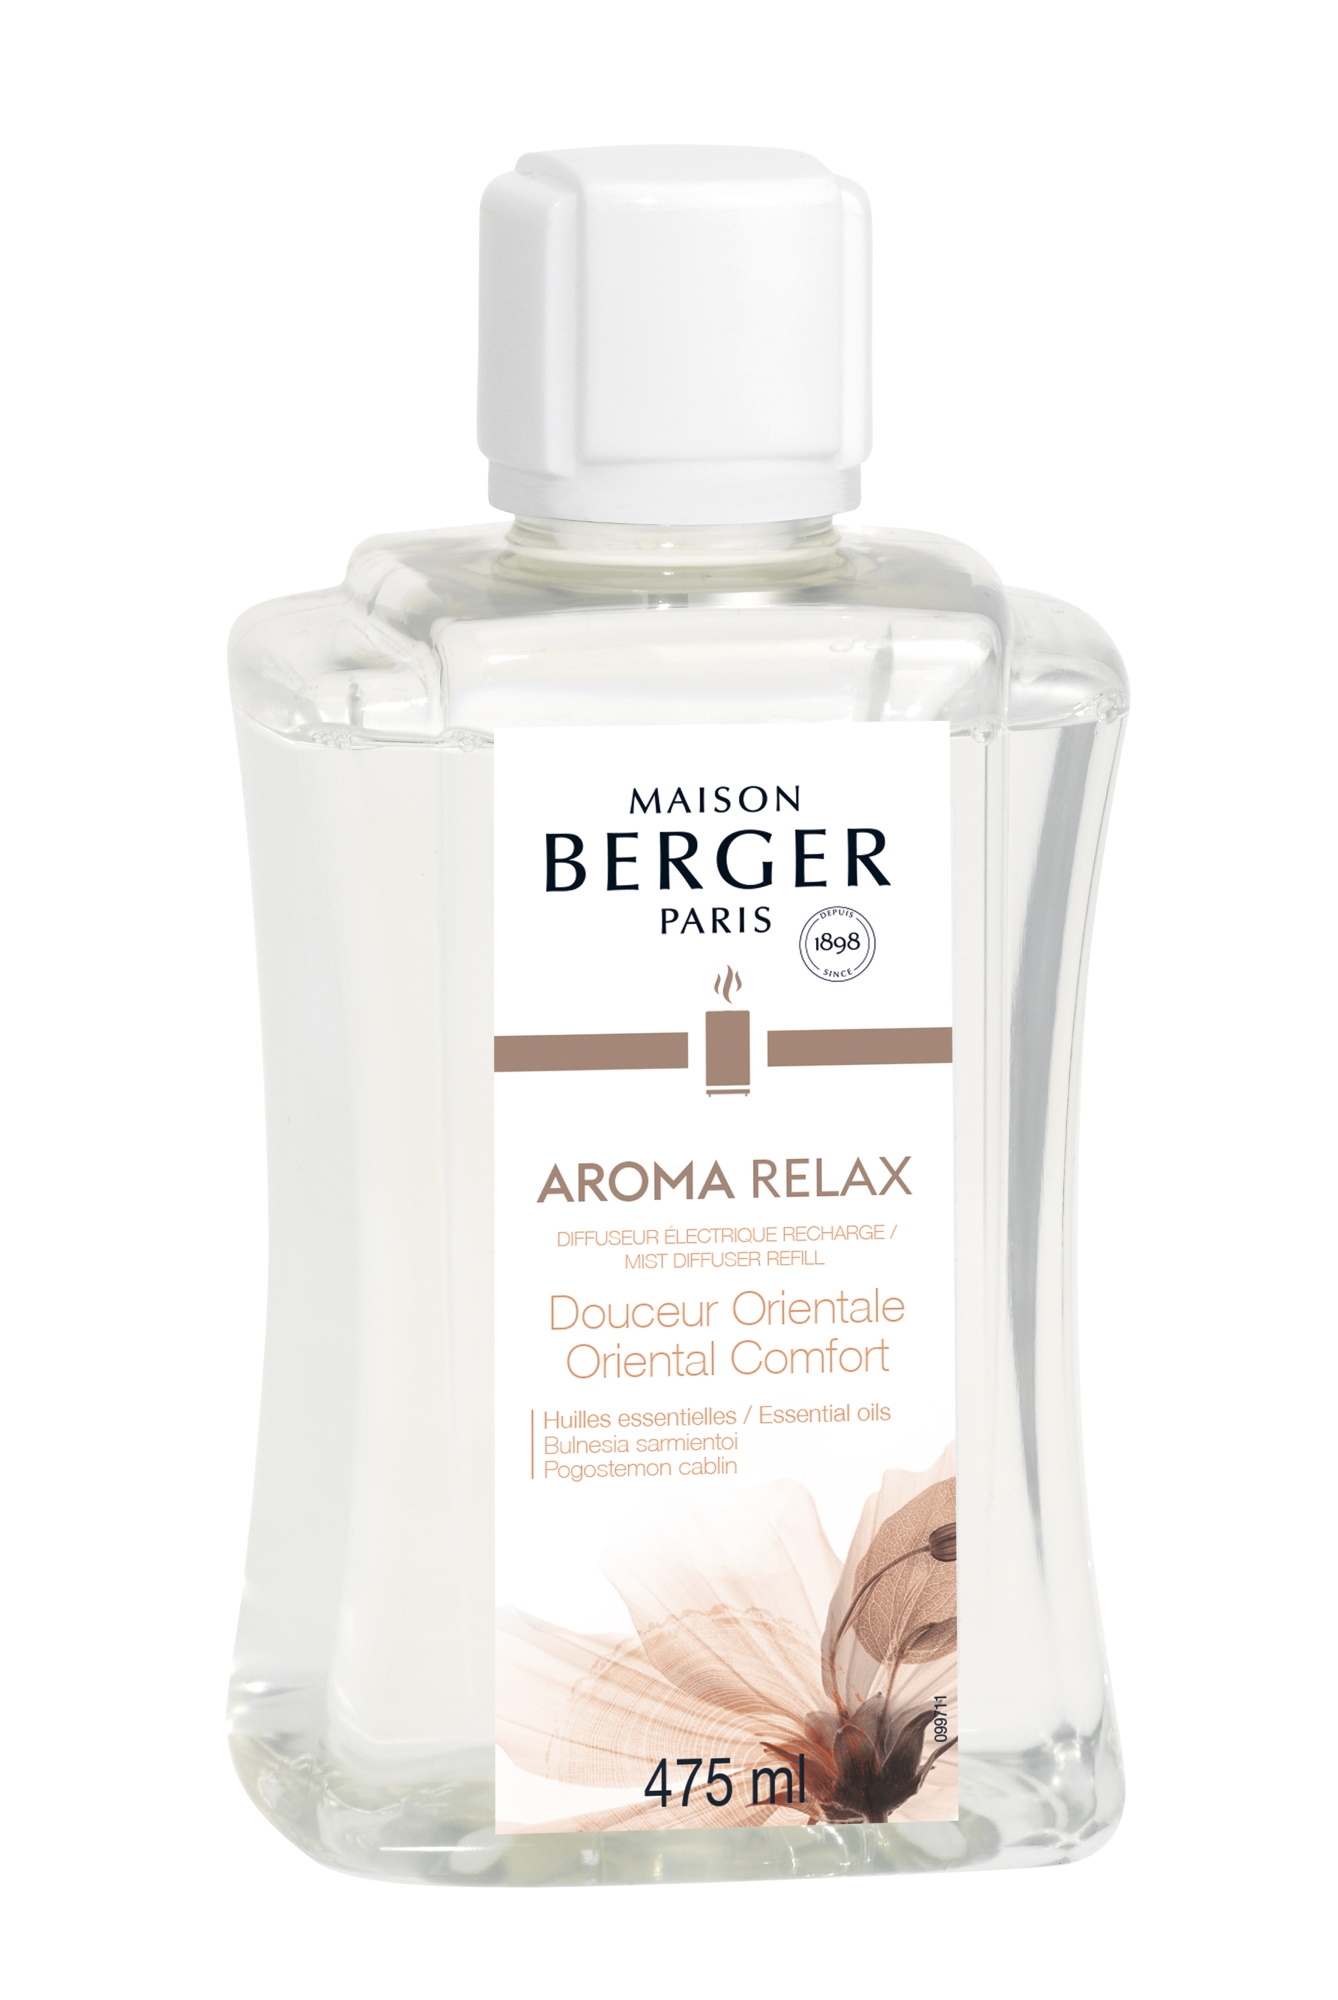 Parfum pentru difuzor ultrasonic Berger Aroma Relax – Douceur Orientale 475ml Maison Berger